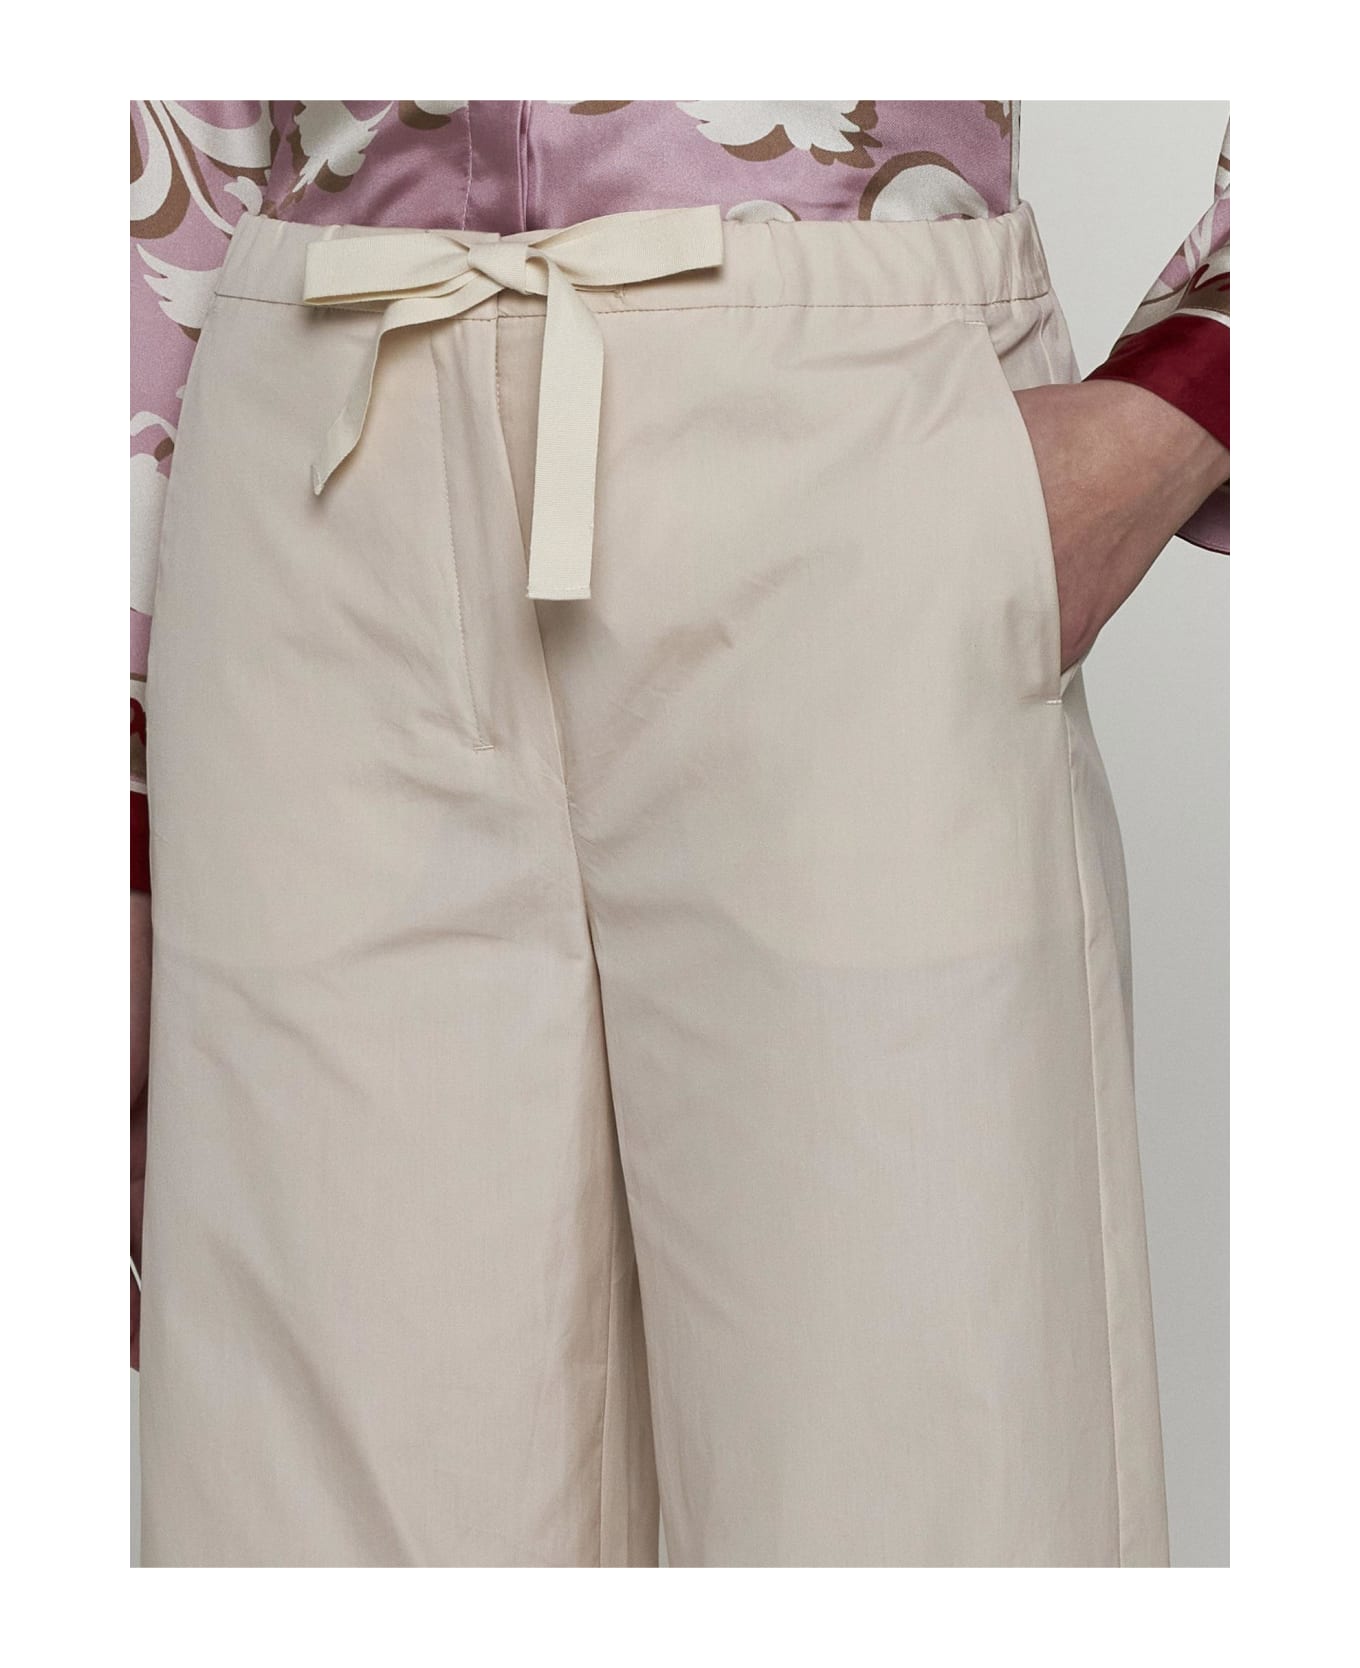 'S Max Mara Argento Cotton Trousers - Gold Cream スウェットパンツ